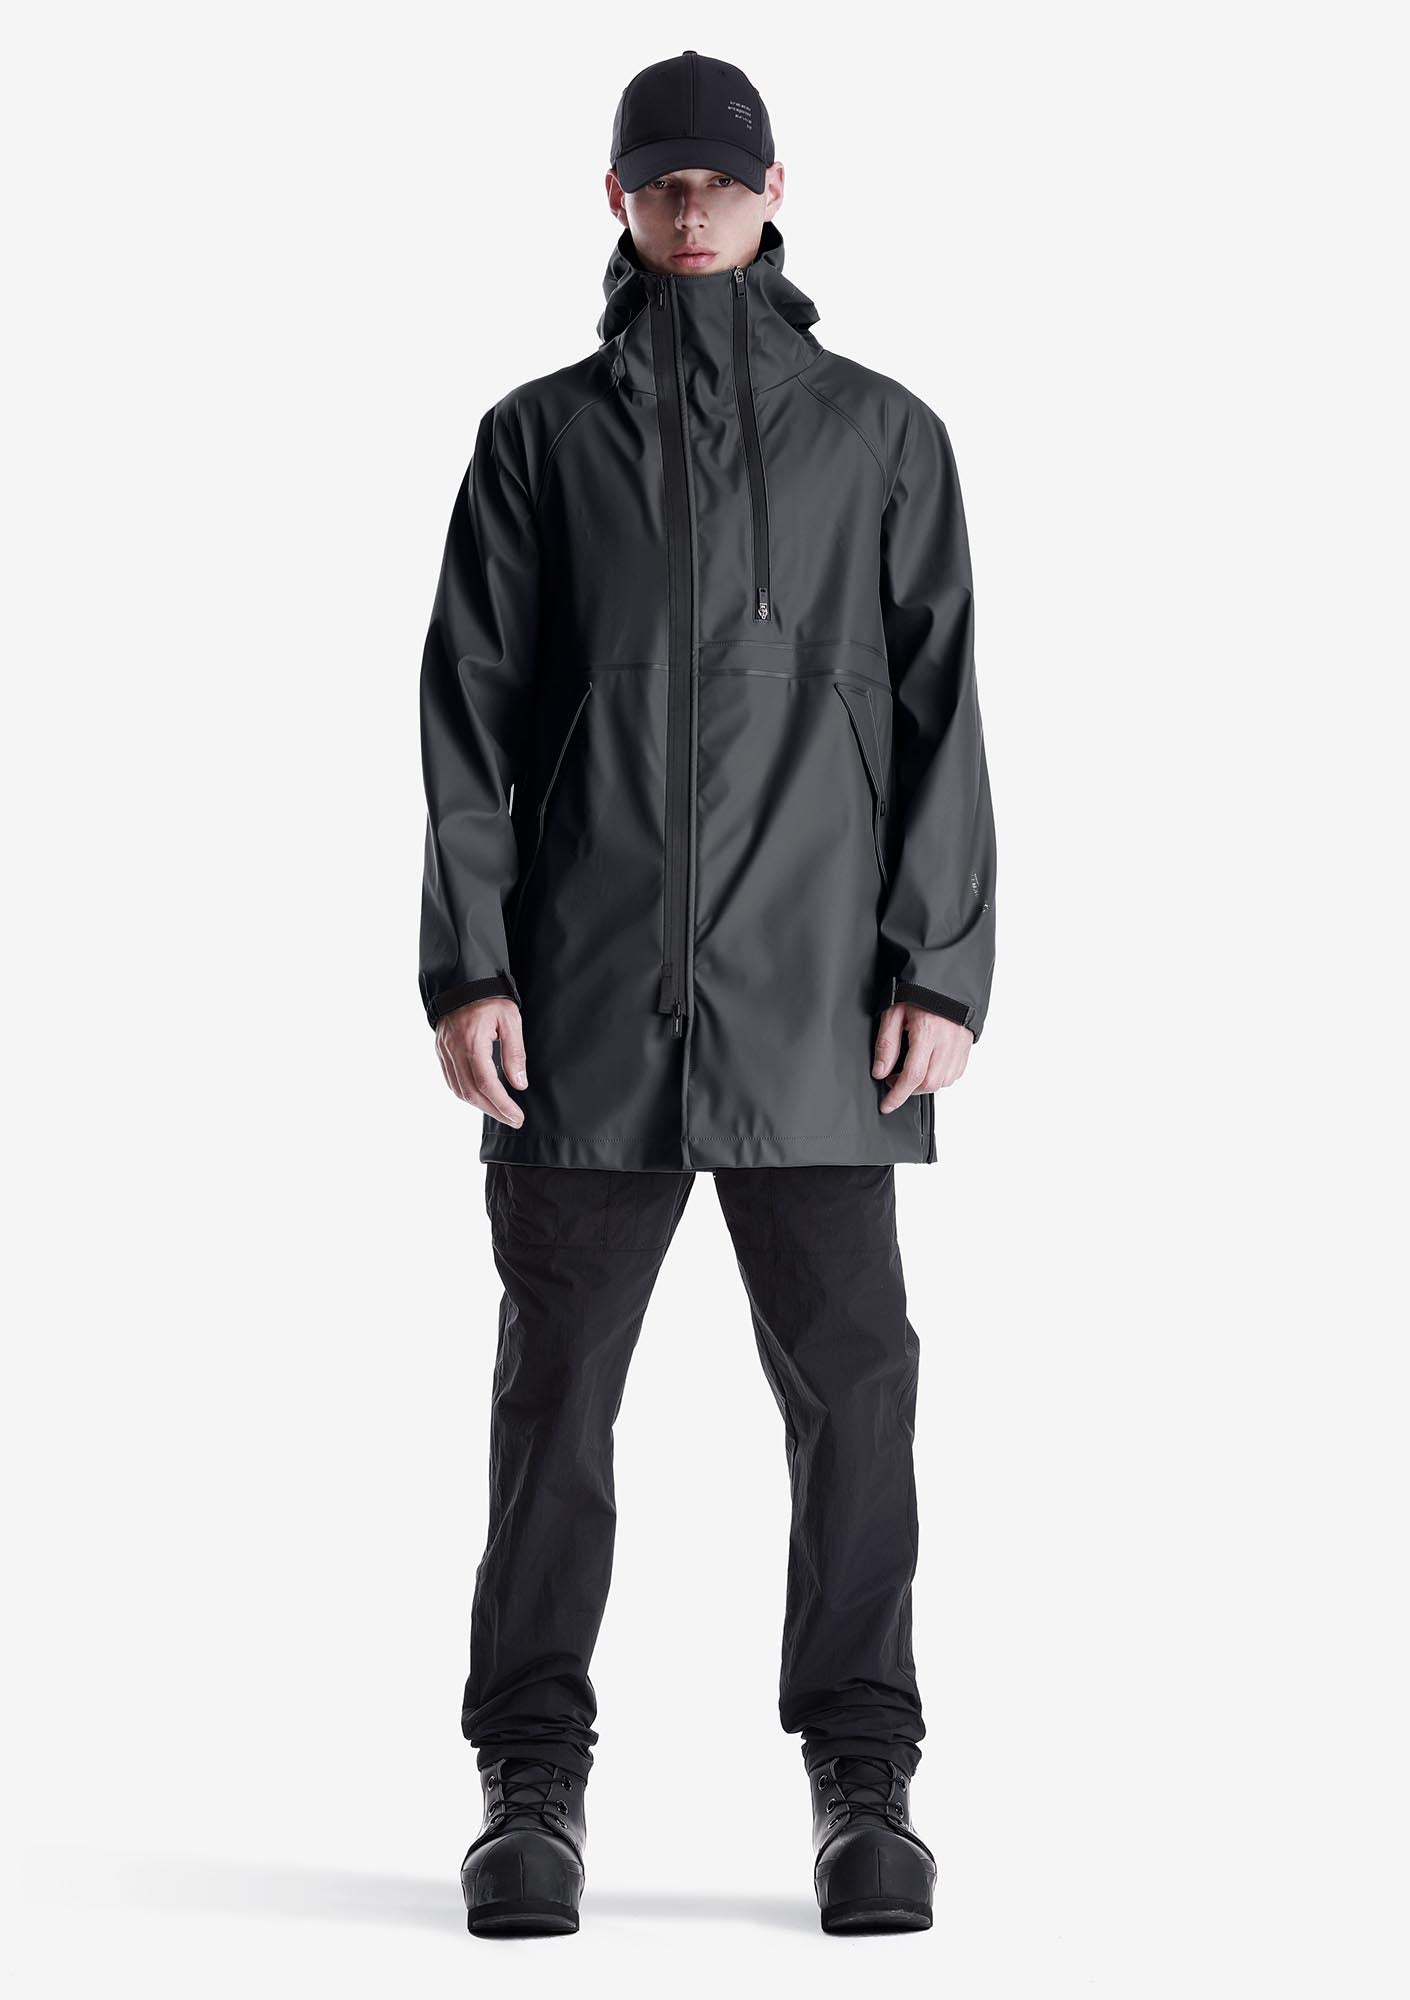 MENTAT Welded Raincoat Qm400-1